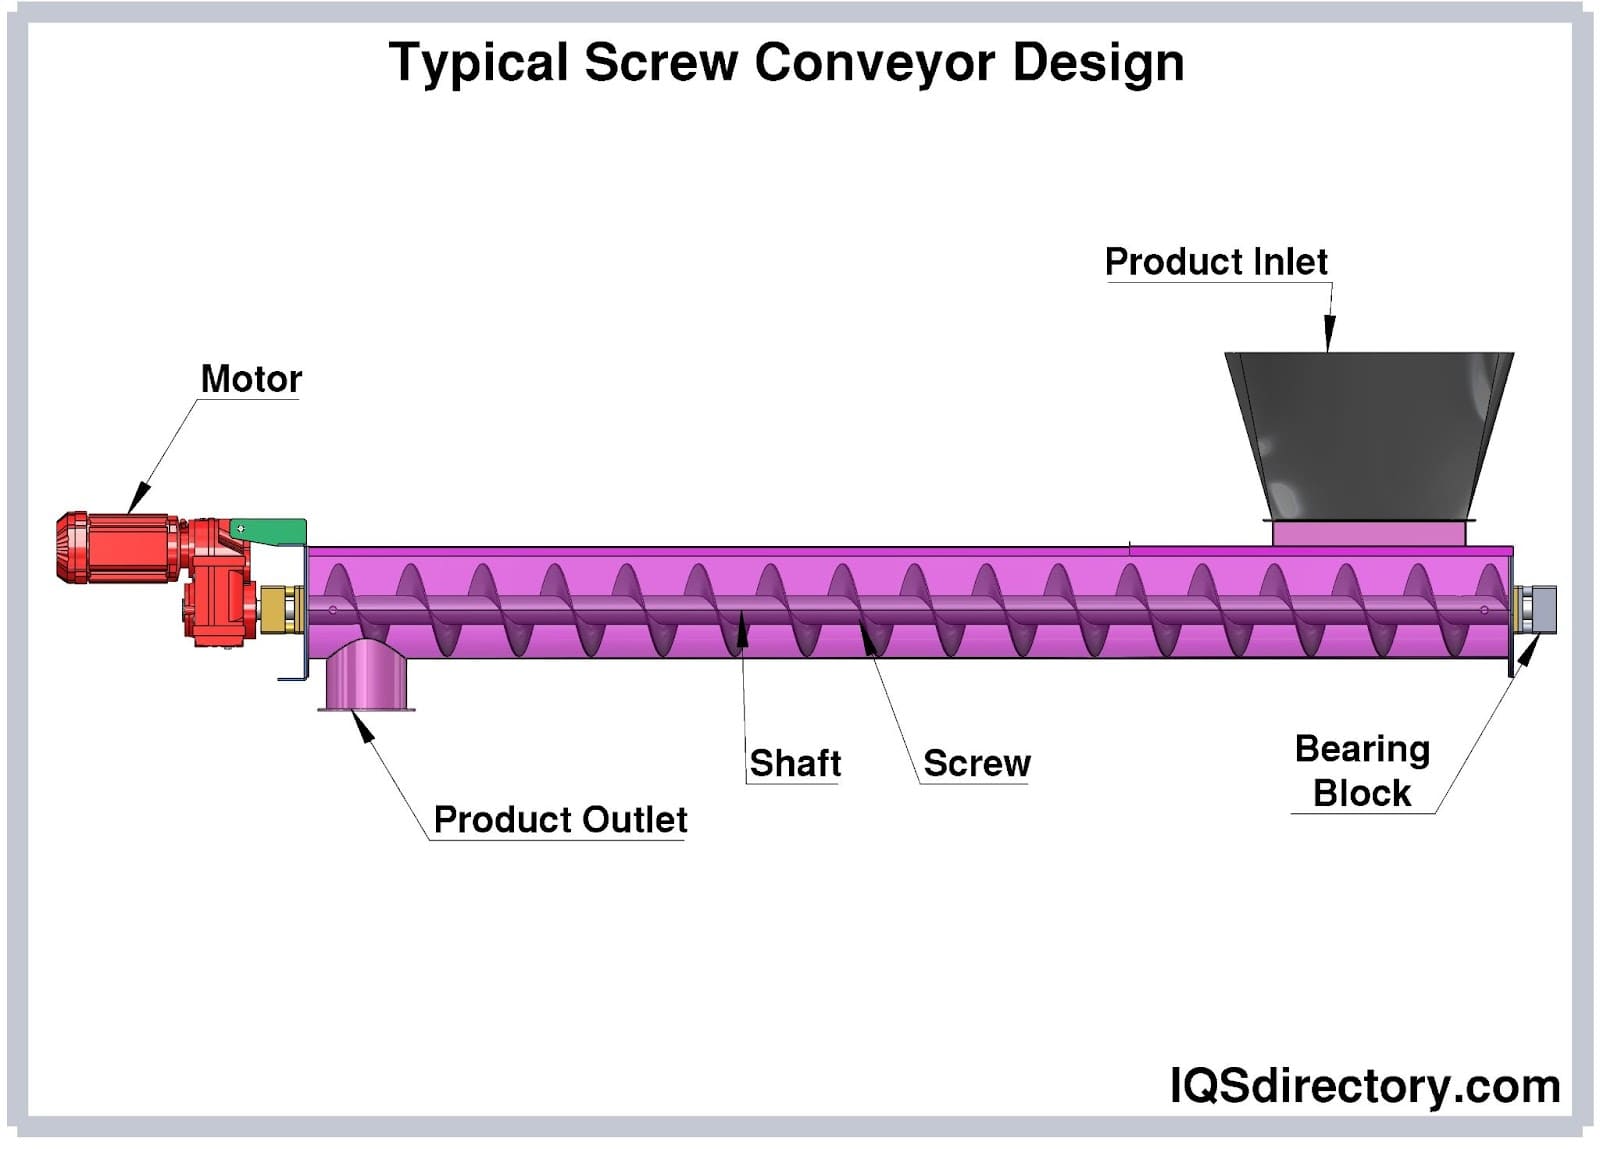 Typical Screw Conveyor Design